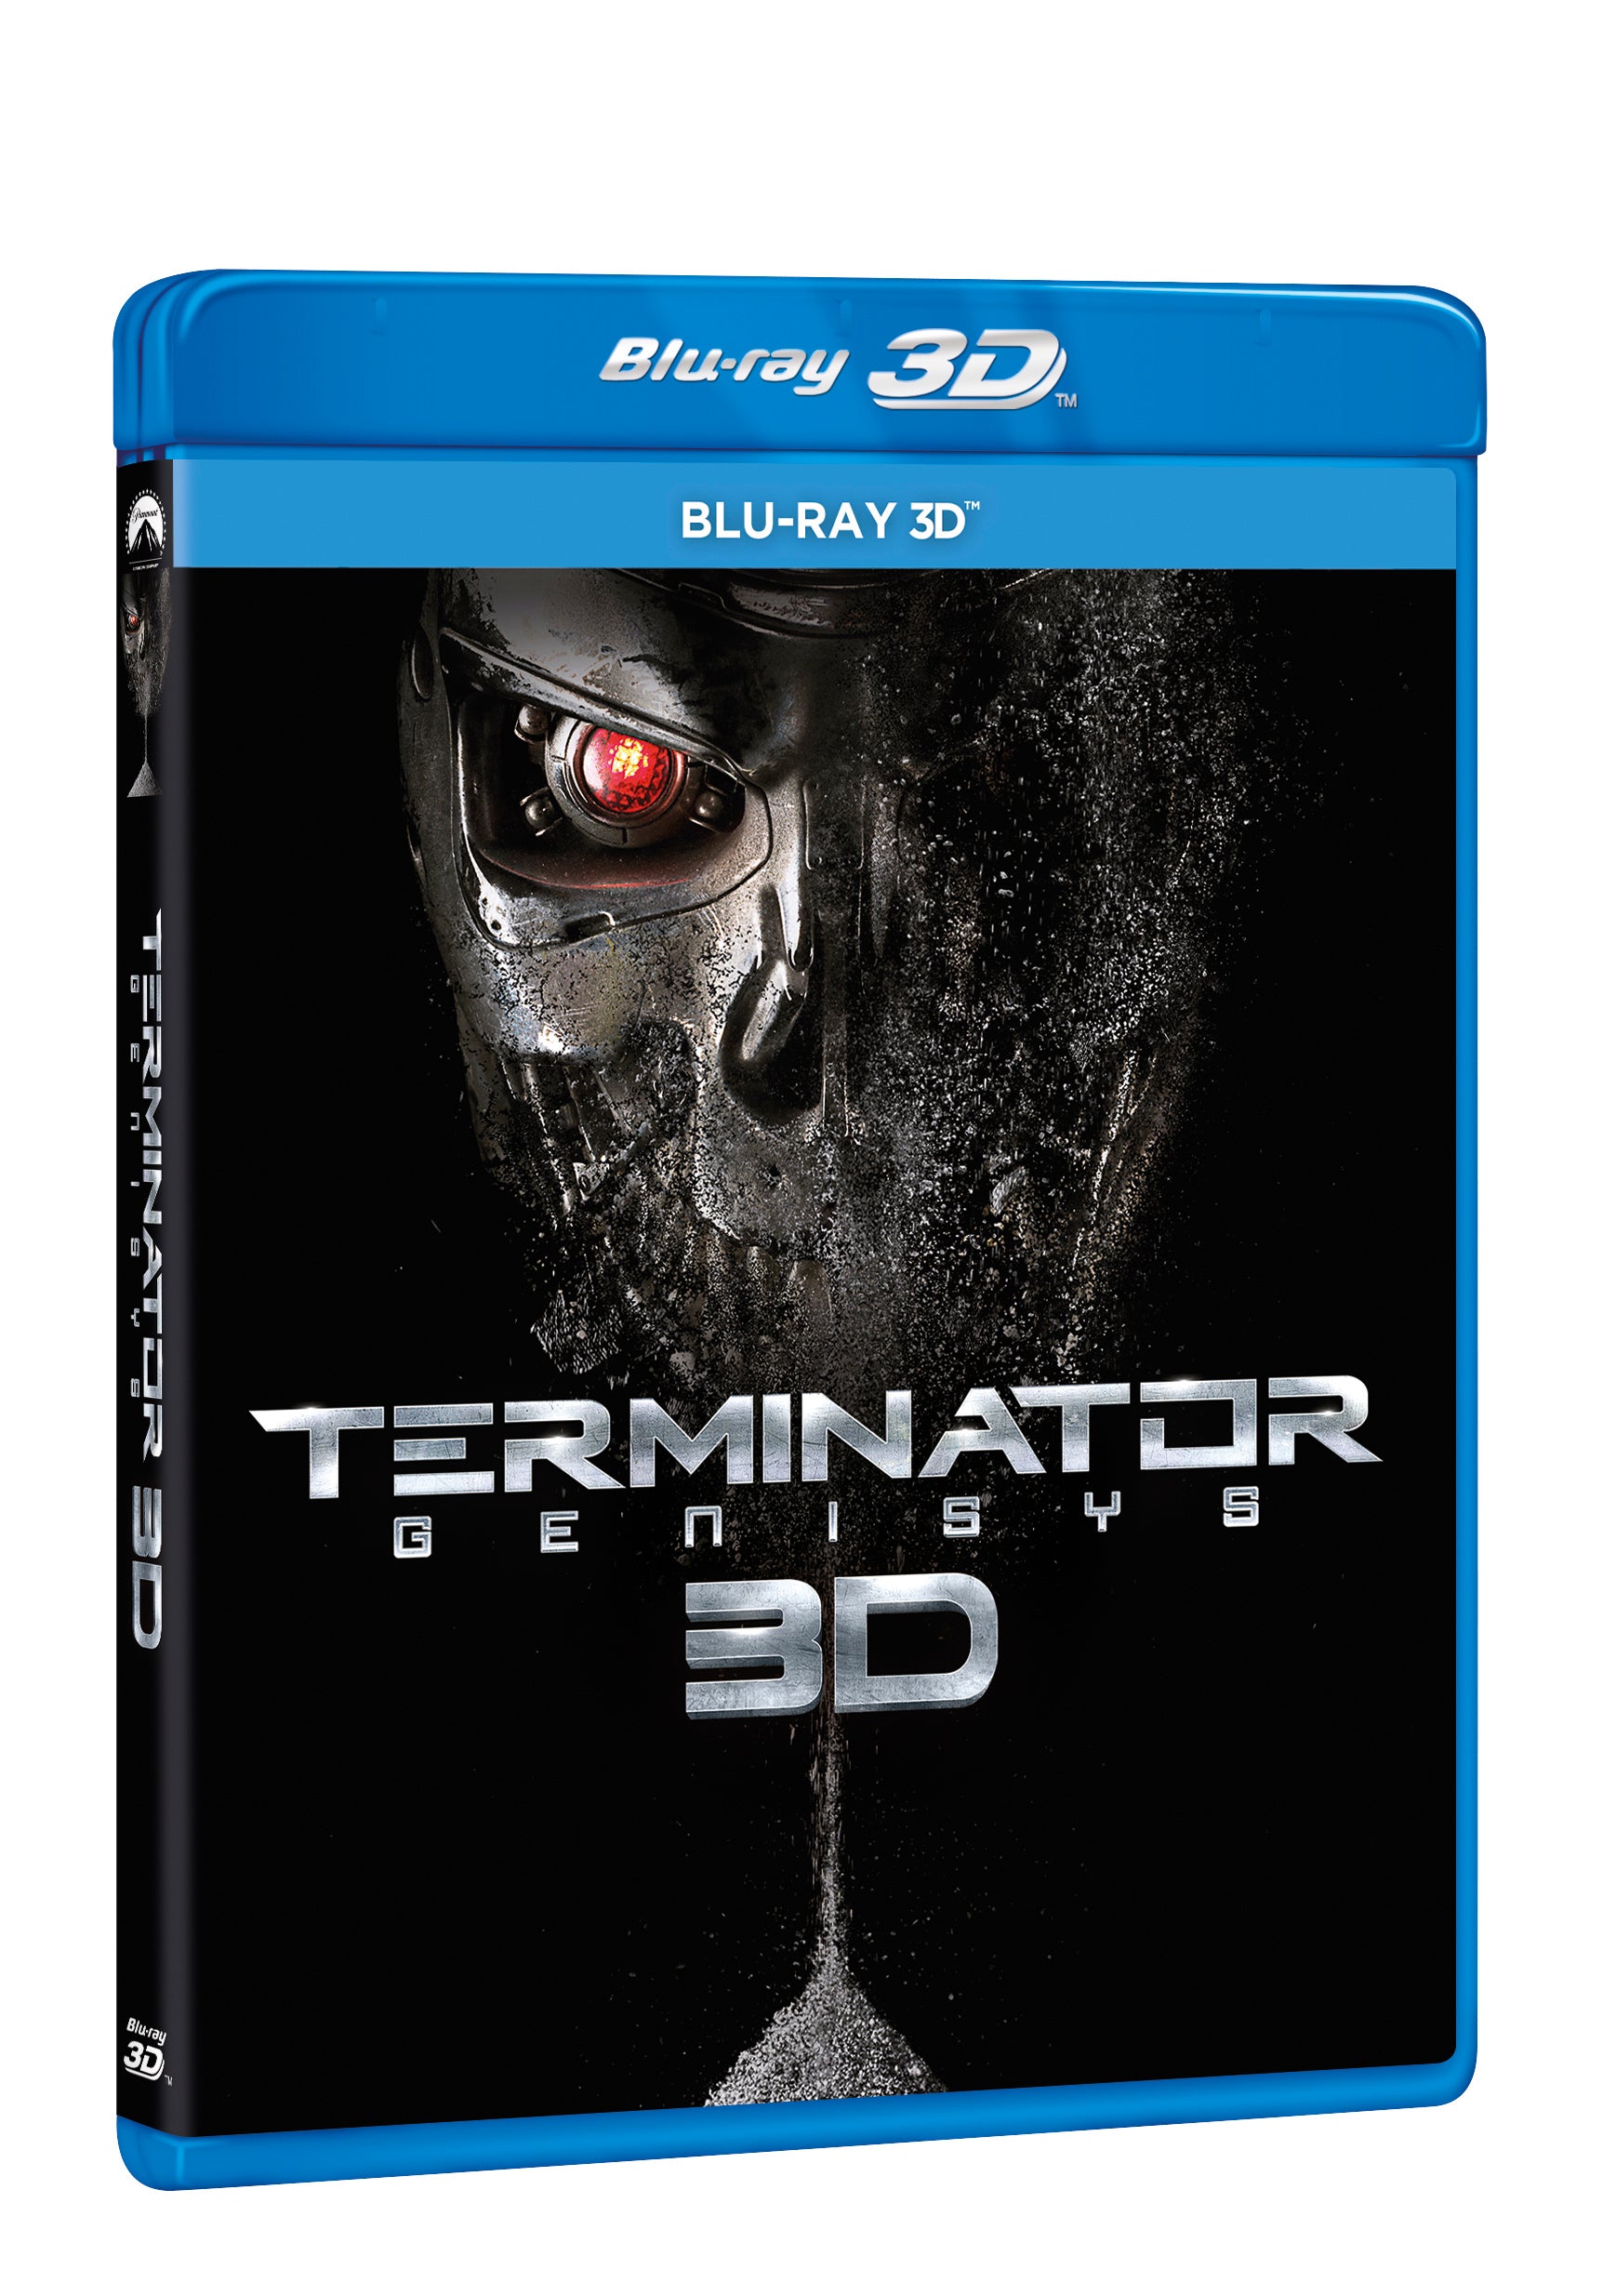 Terminator Genisys BD (3D) / Terminator Genisys 3D - Czech version